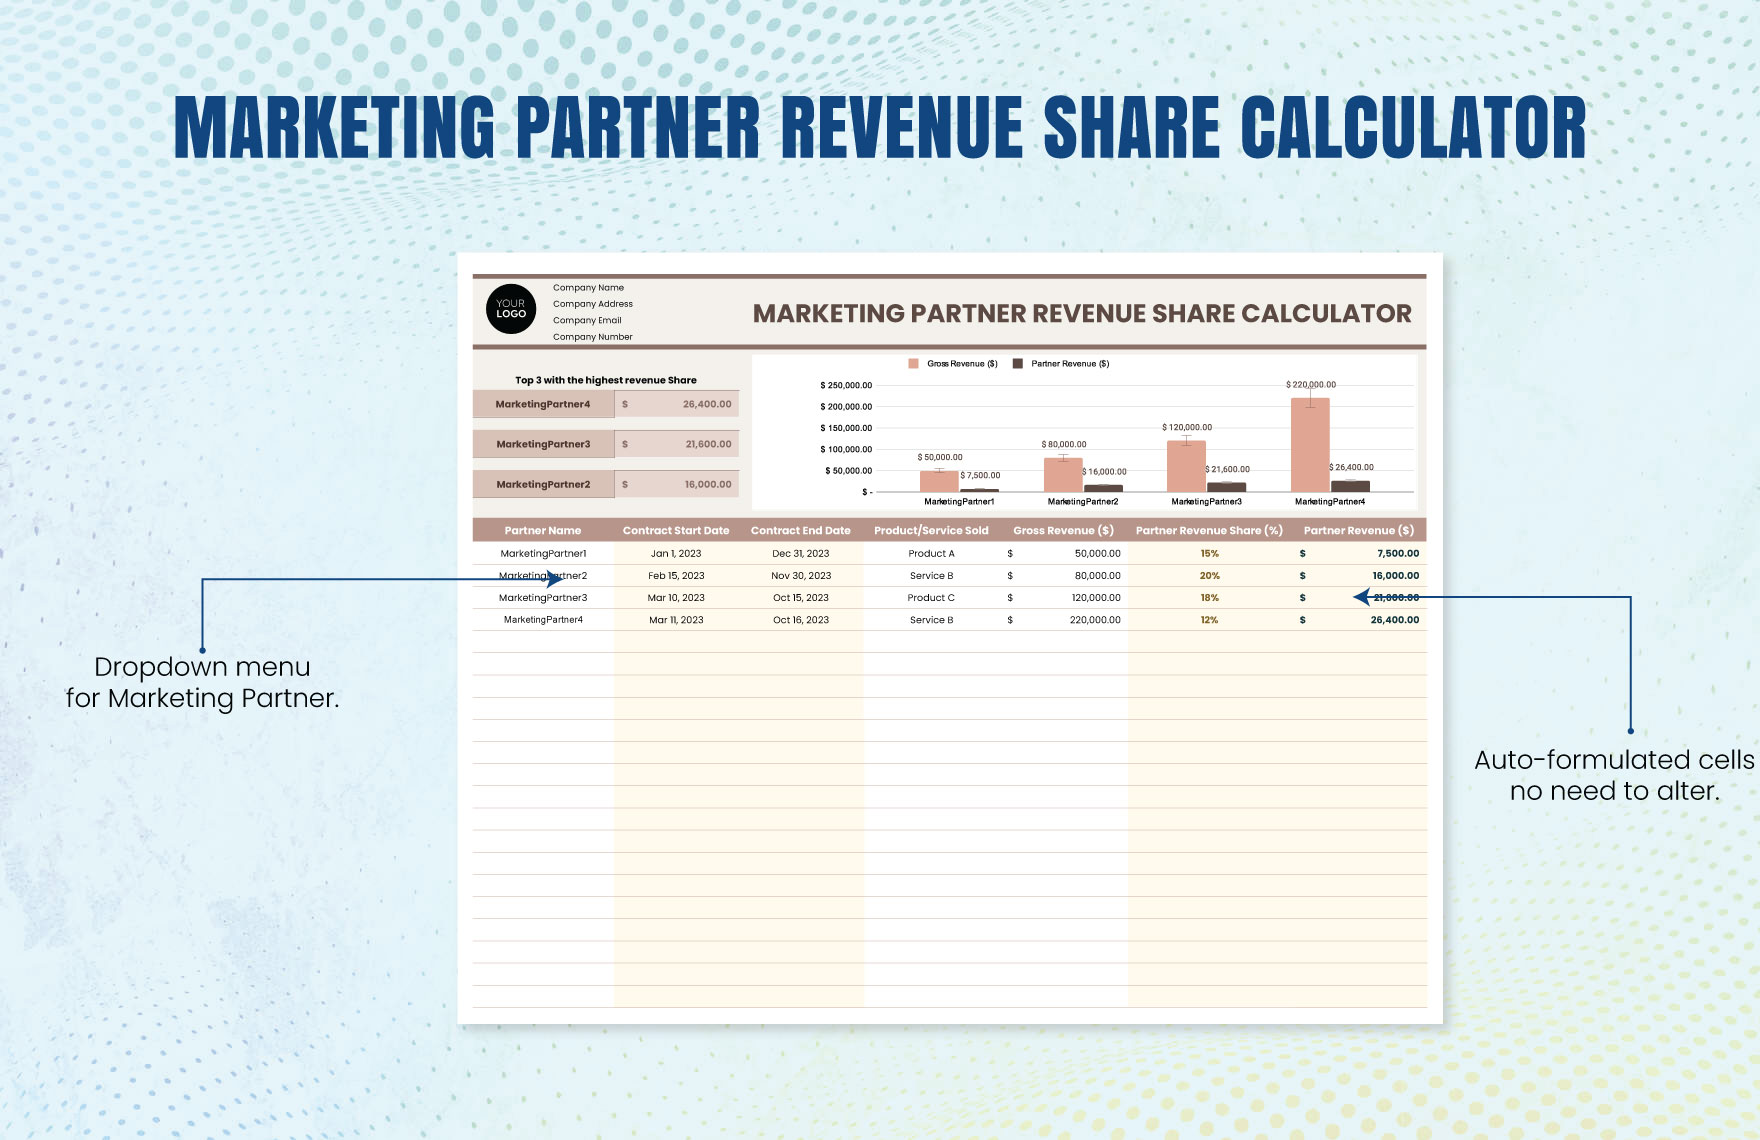 Marketing Partner Revenue Share Calculator Template